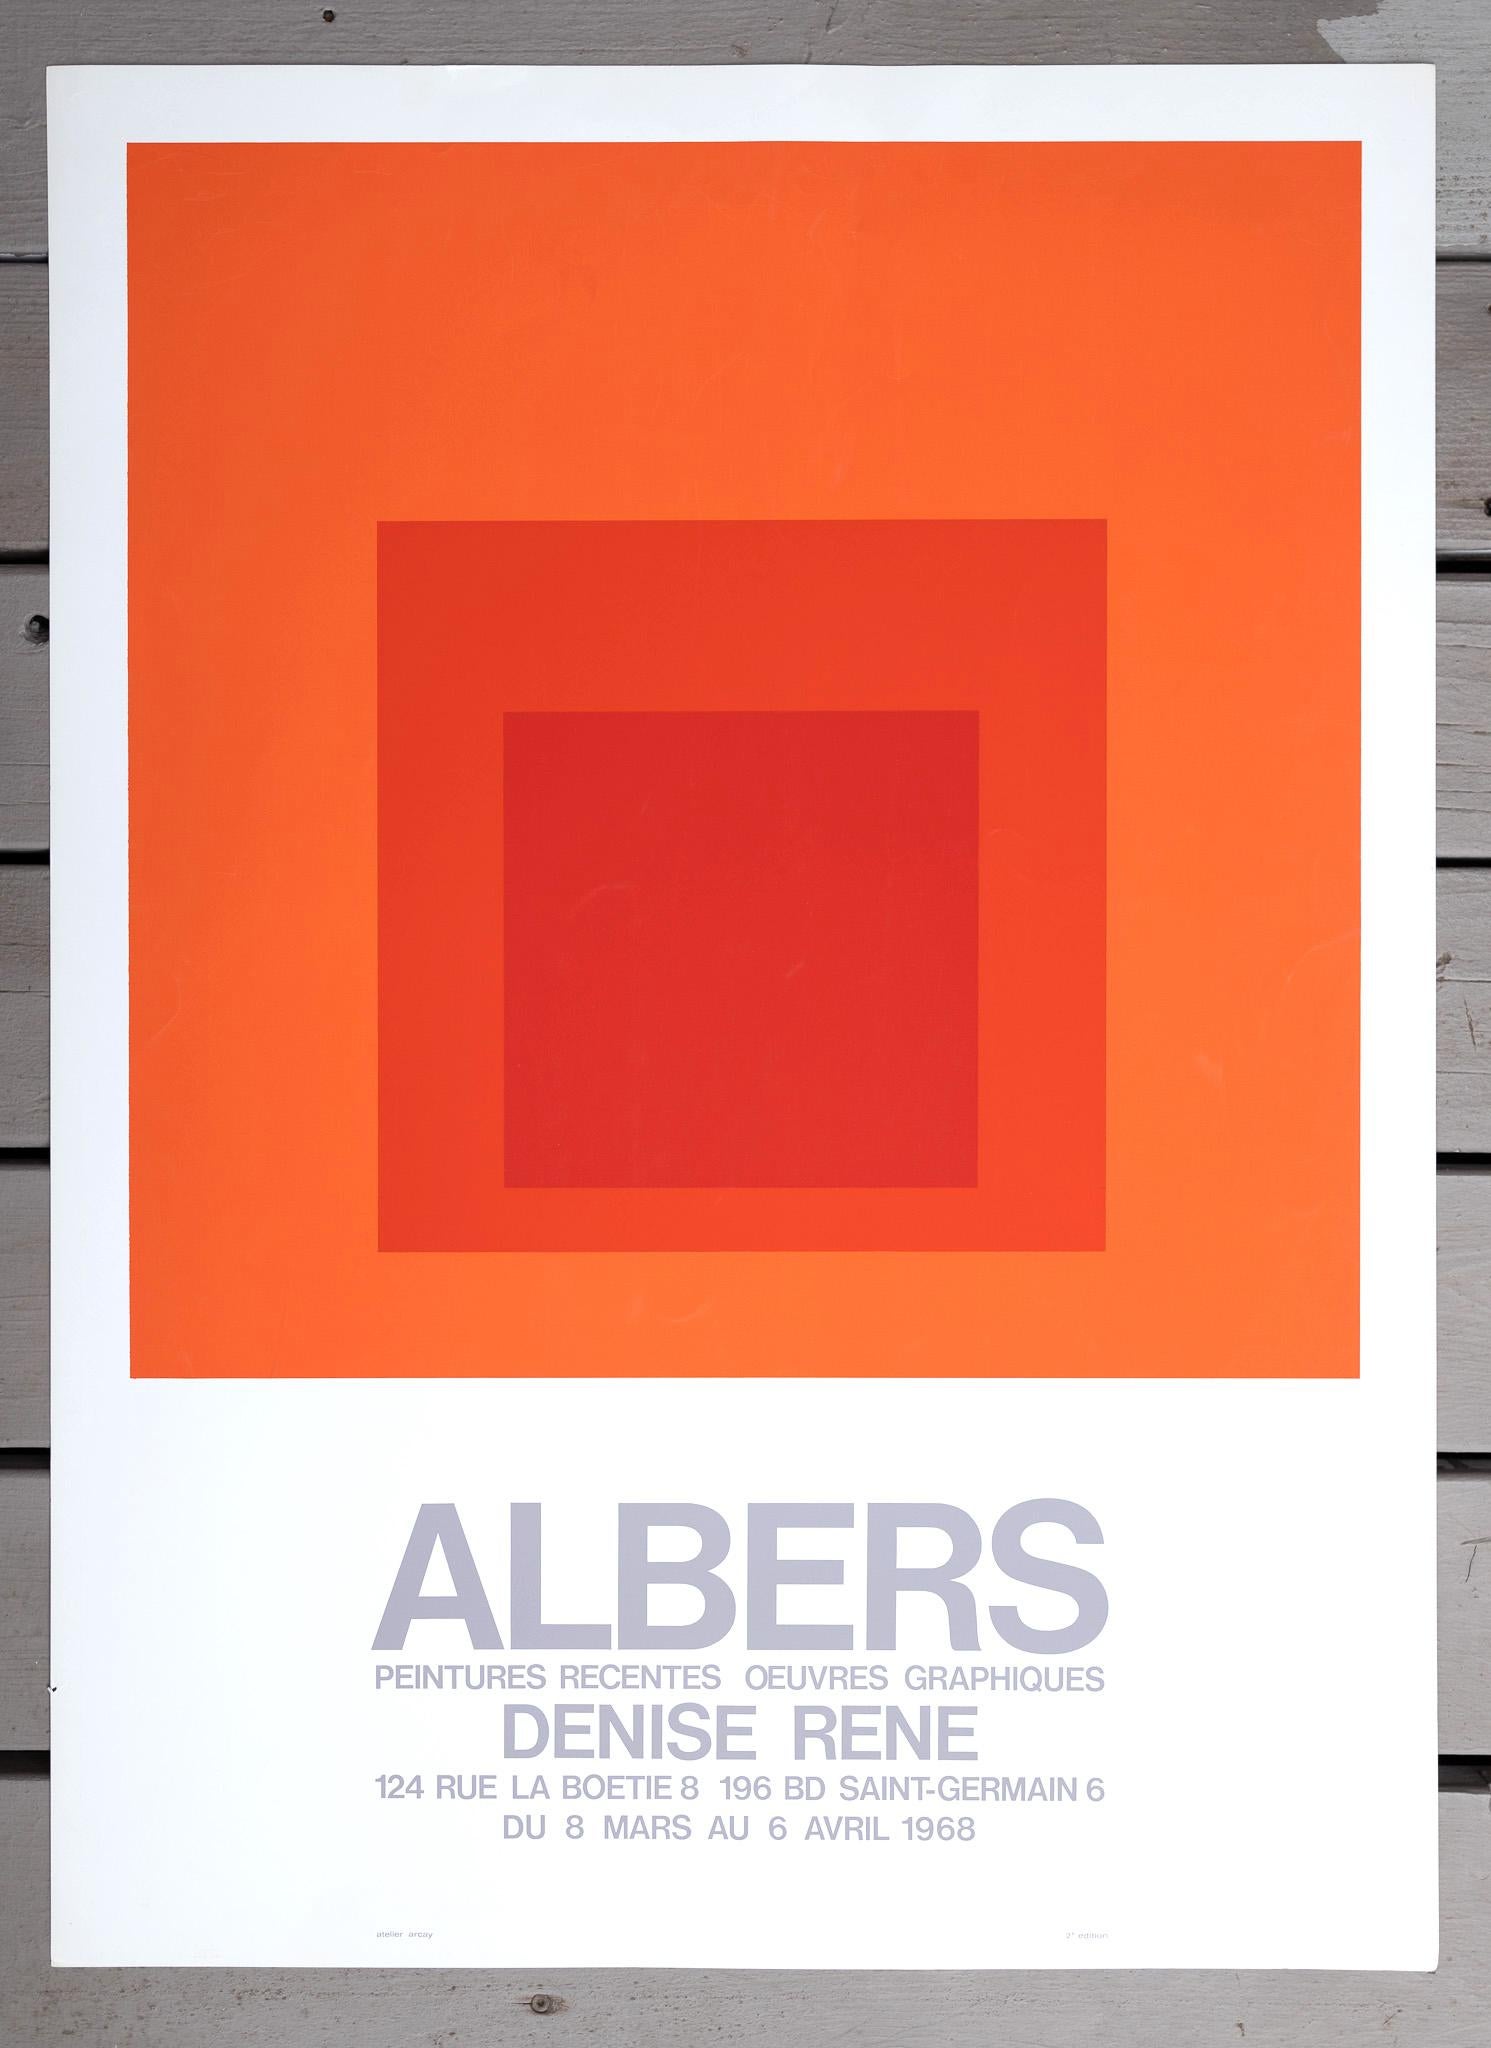 Denise Rene Poster - Print by Josef Albers